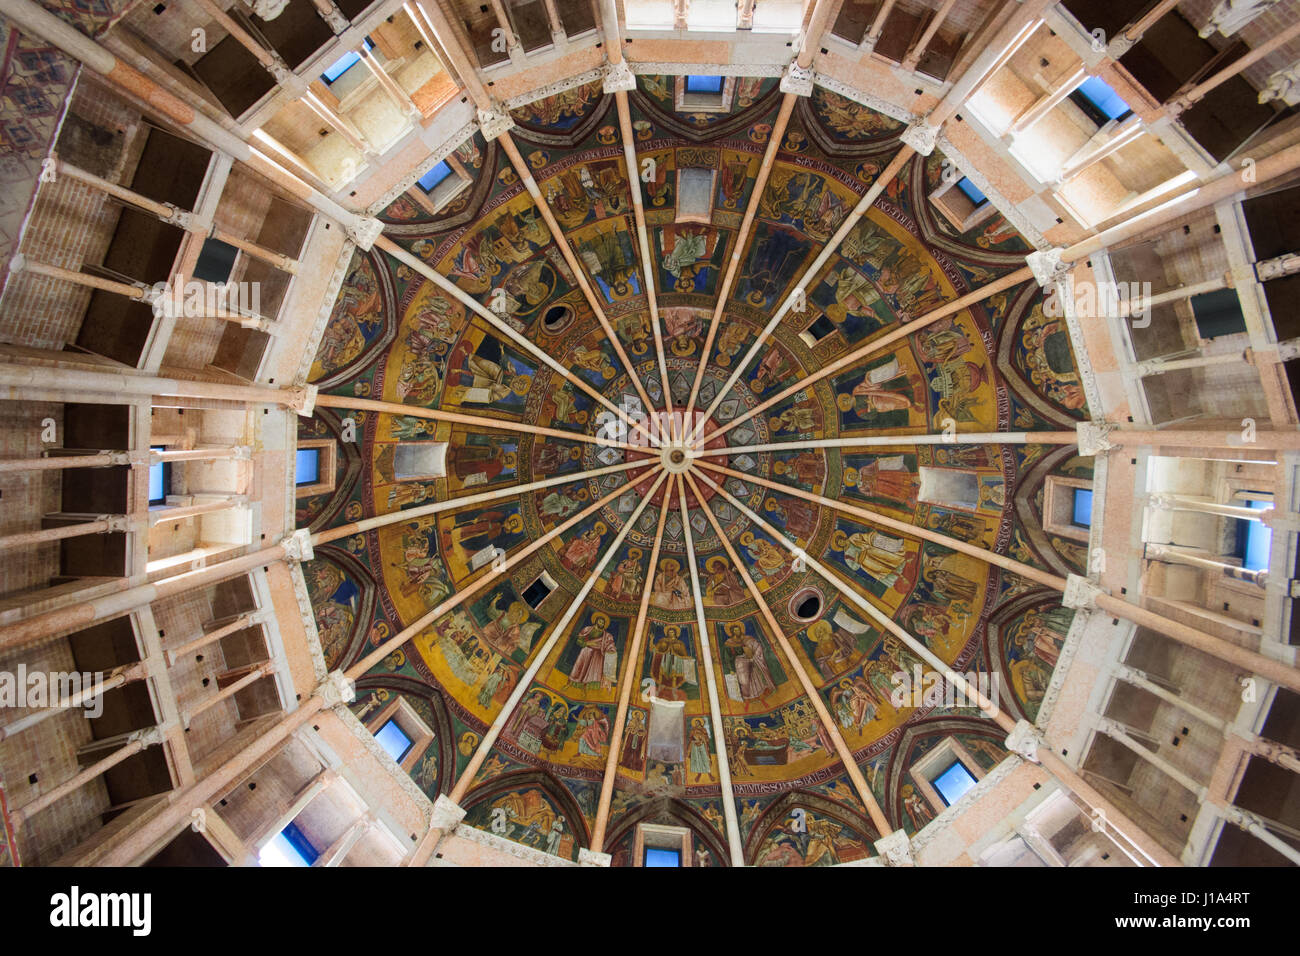 PARMA, ITALY - JAN 22, 2015: The ceiling fresco in the Baptistery of Parma, Emilia-Romagna, Italy Stock Photo